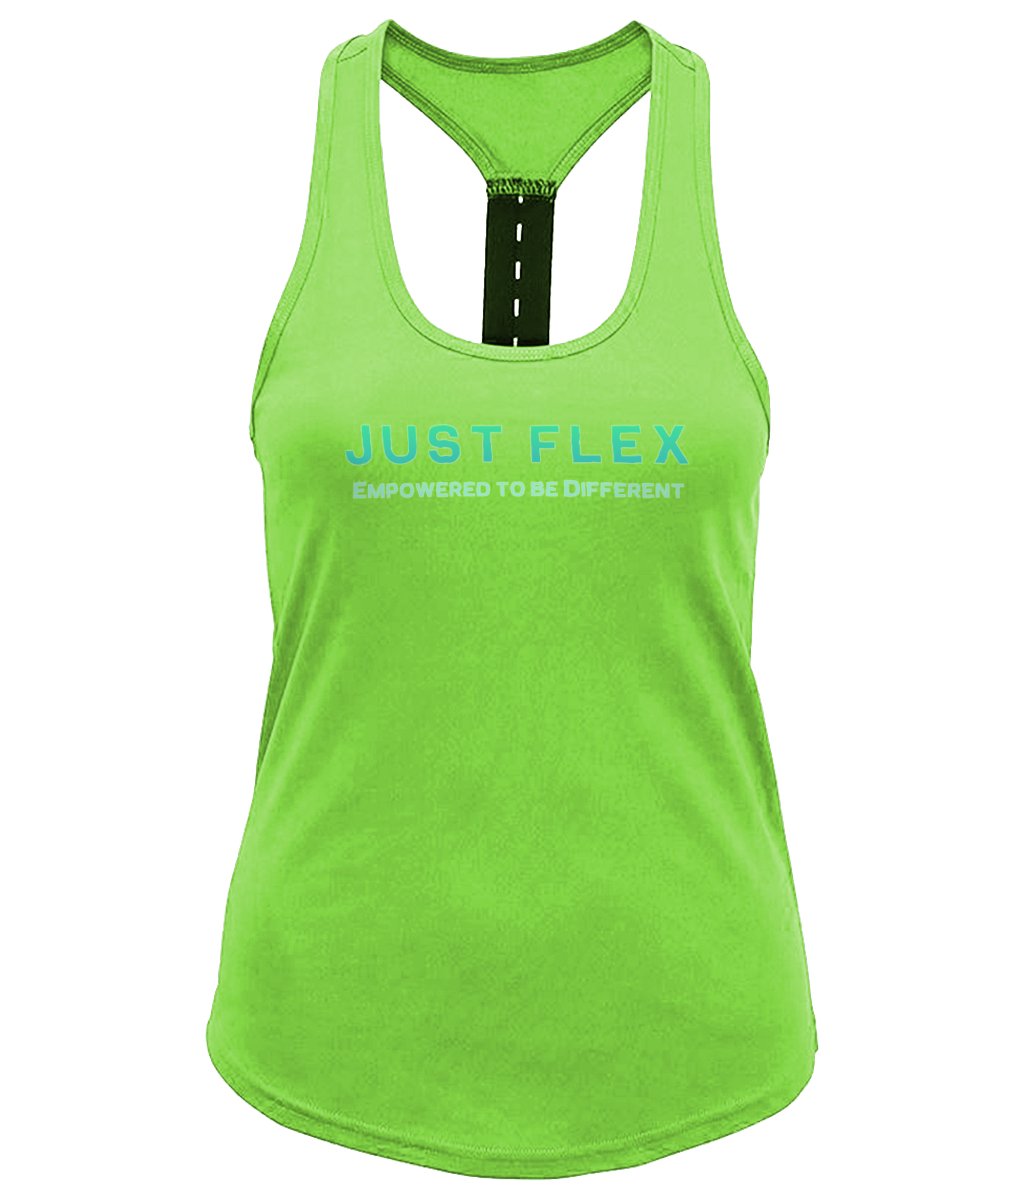 Just Flex - Empowered To Be Different Women's TriDri® Performance Strap Back Vest - Just Flex